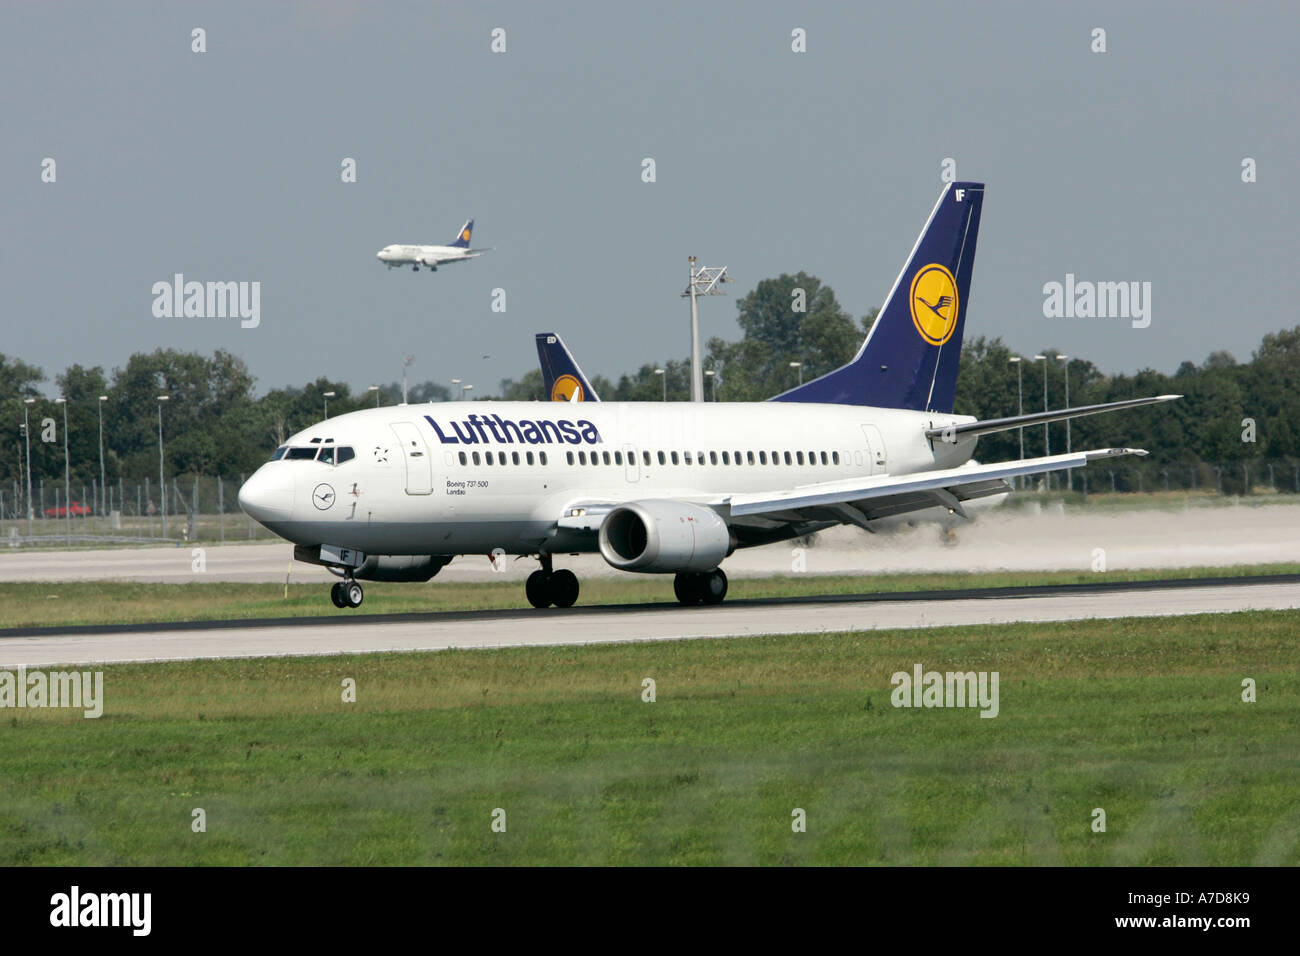 Munich, GER, 11. Aug. 2005 - The Lufthansa-Boeing LANDAU touch down at Munich Airport. Stock Photo